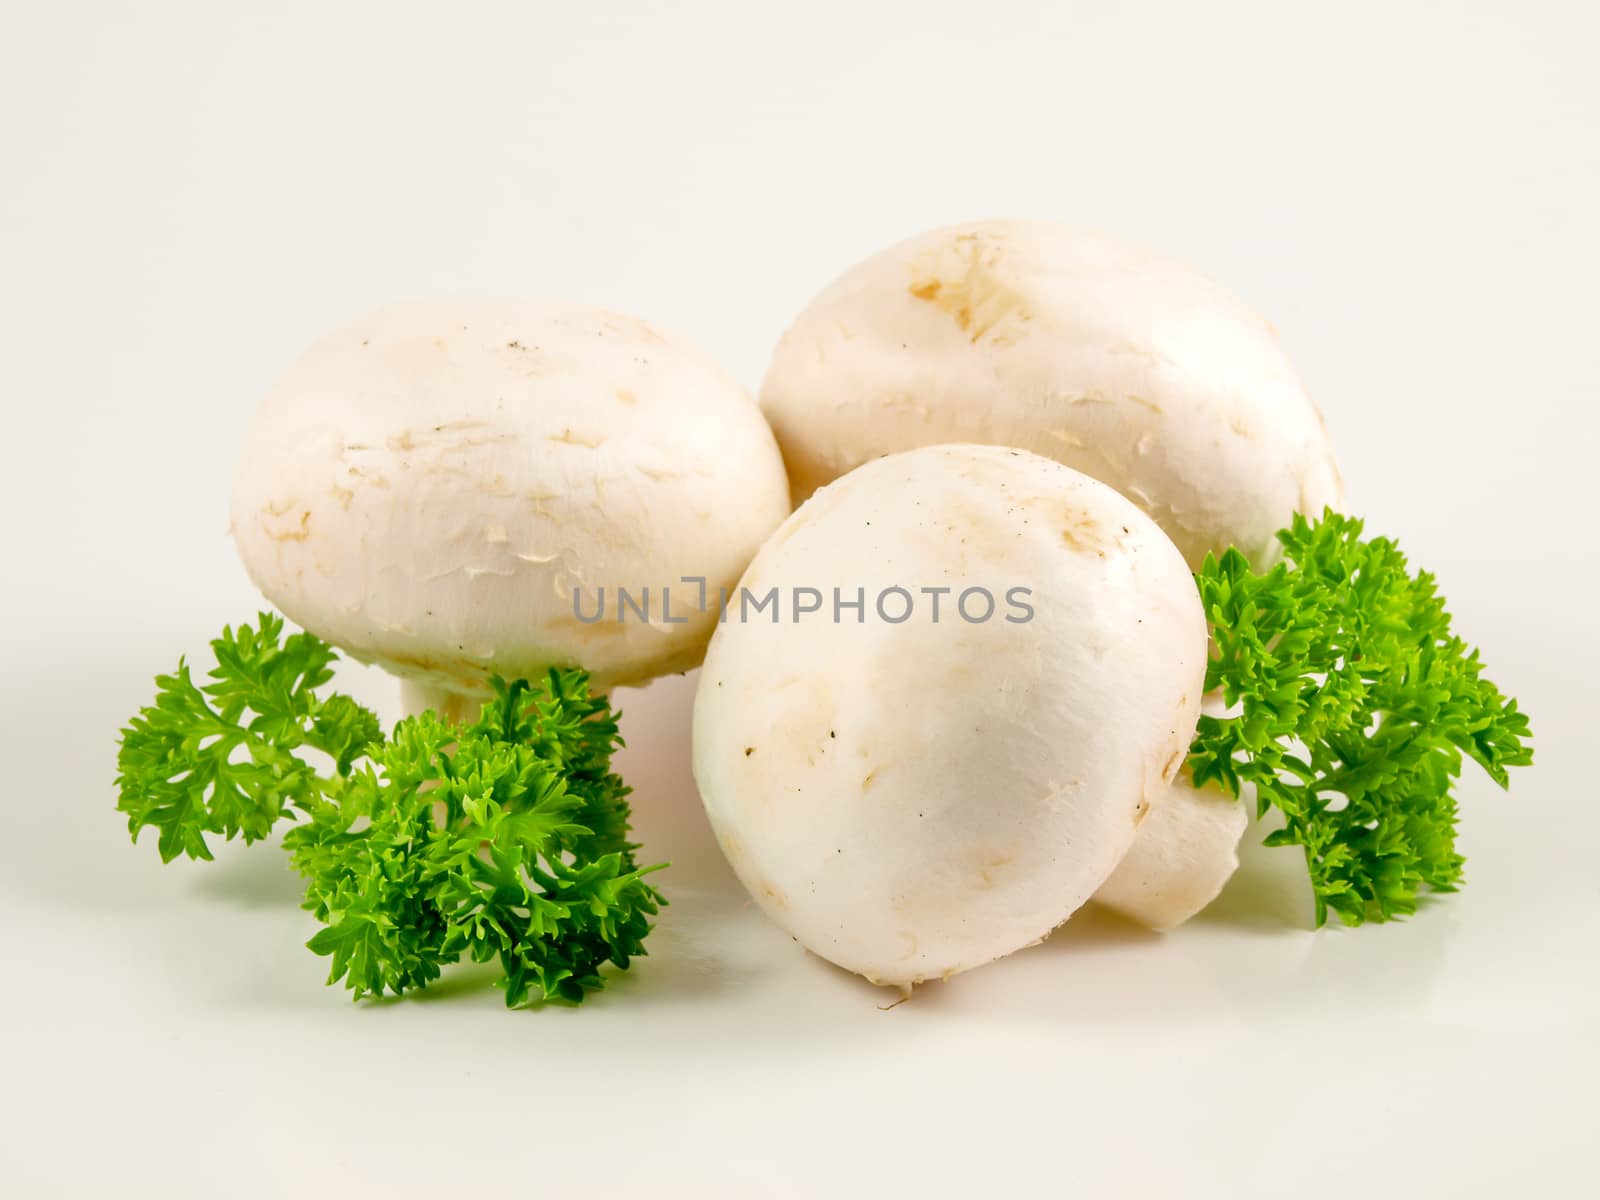 Three champignon mushrooms and parsley